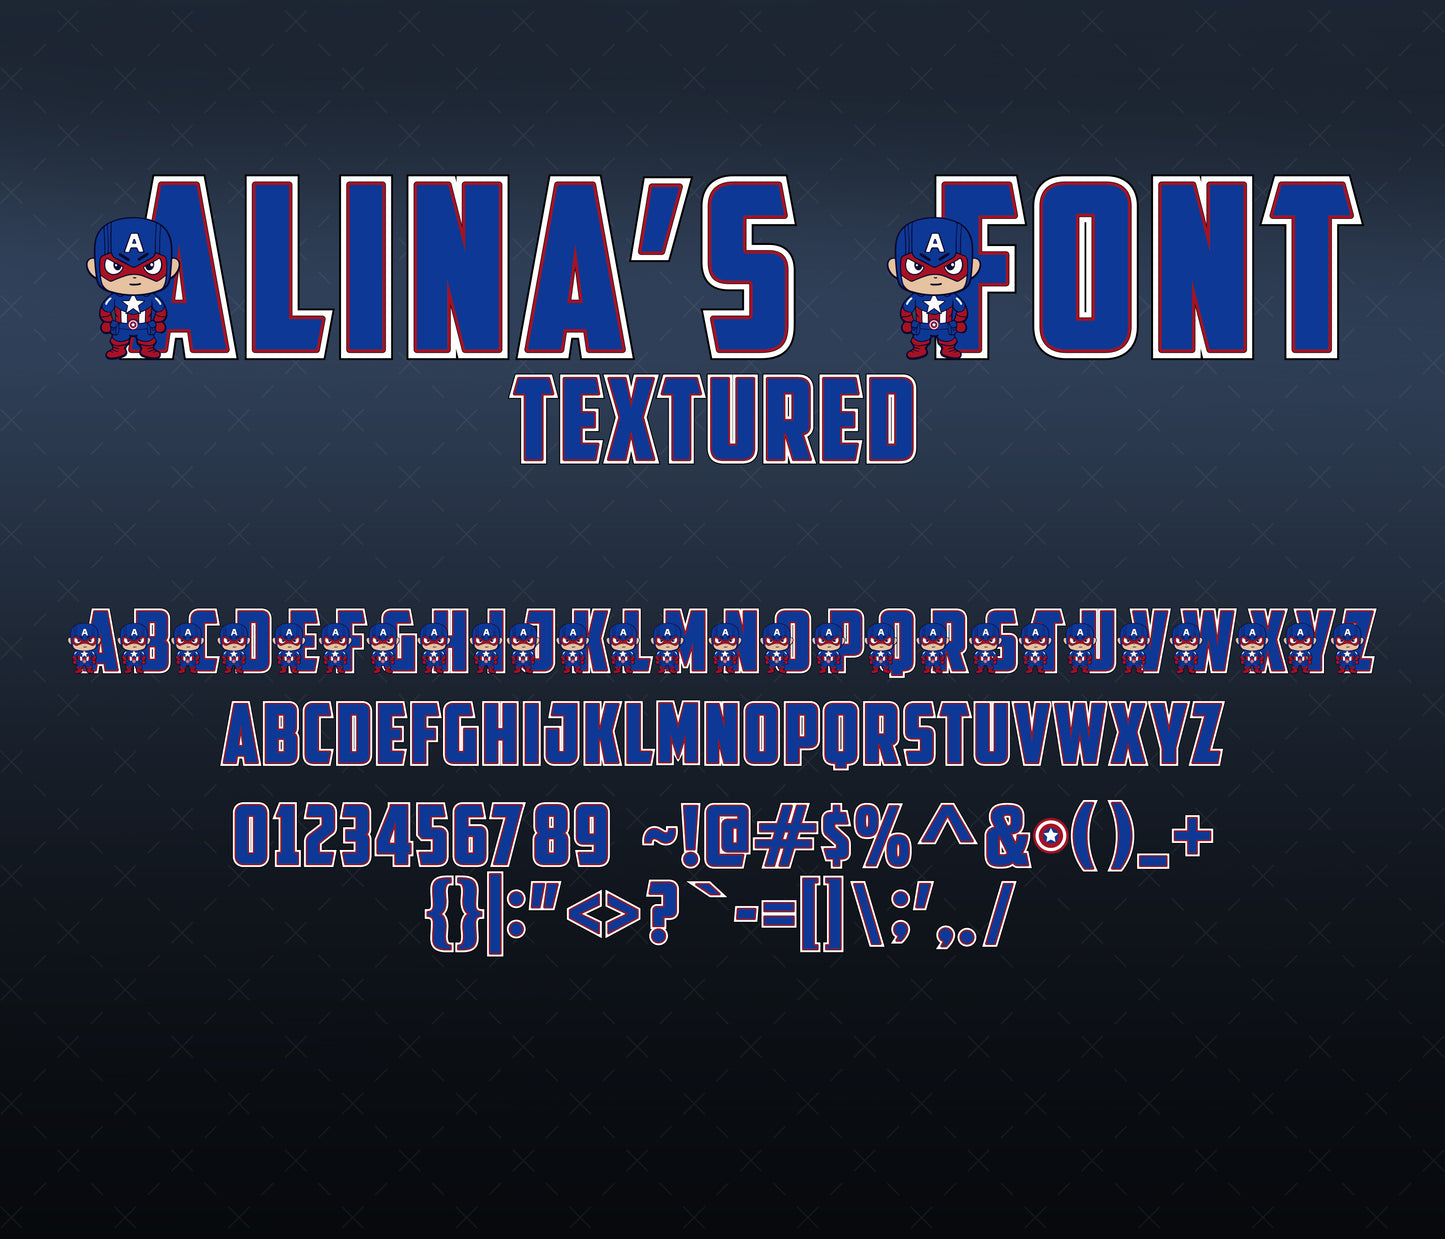 Captain America Textured Font